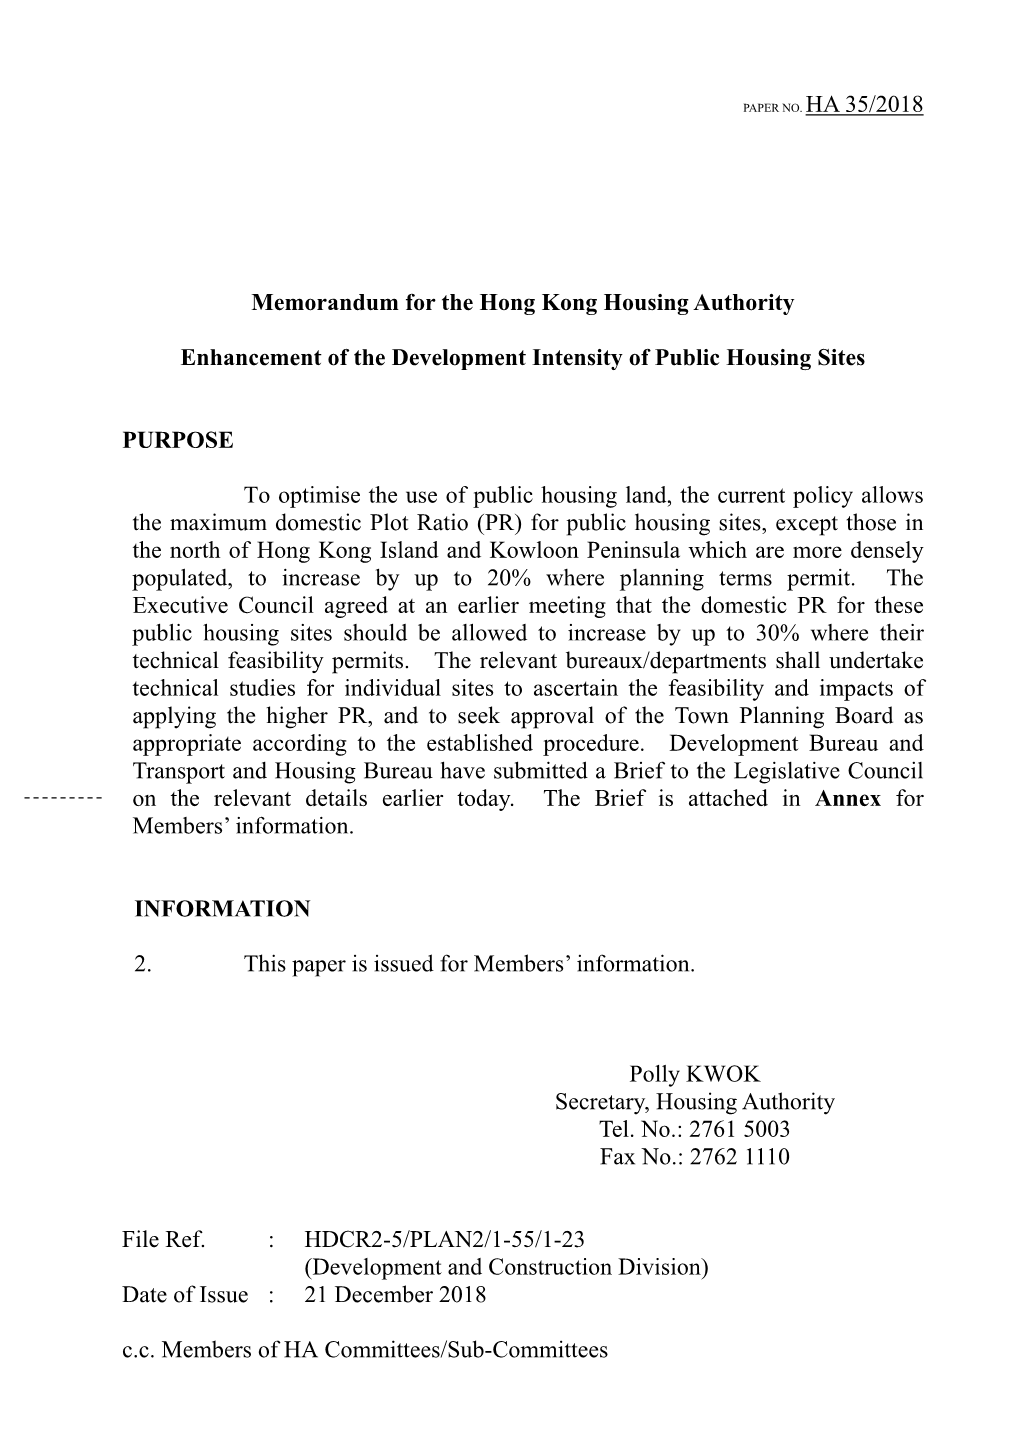 Memorandum for the Hong Kong Housing Authority Enhancement Of